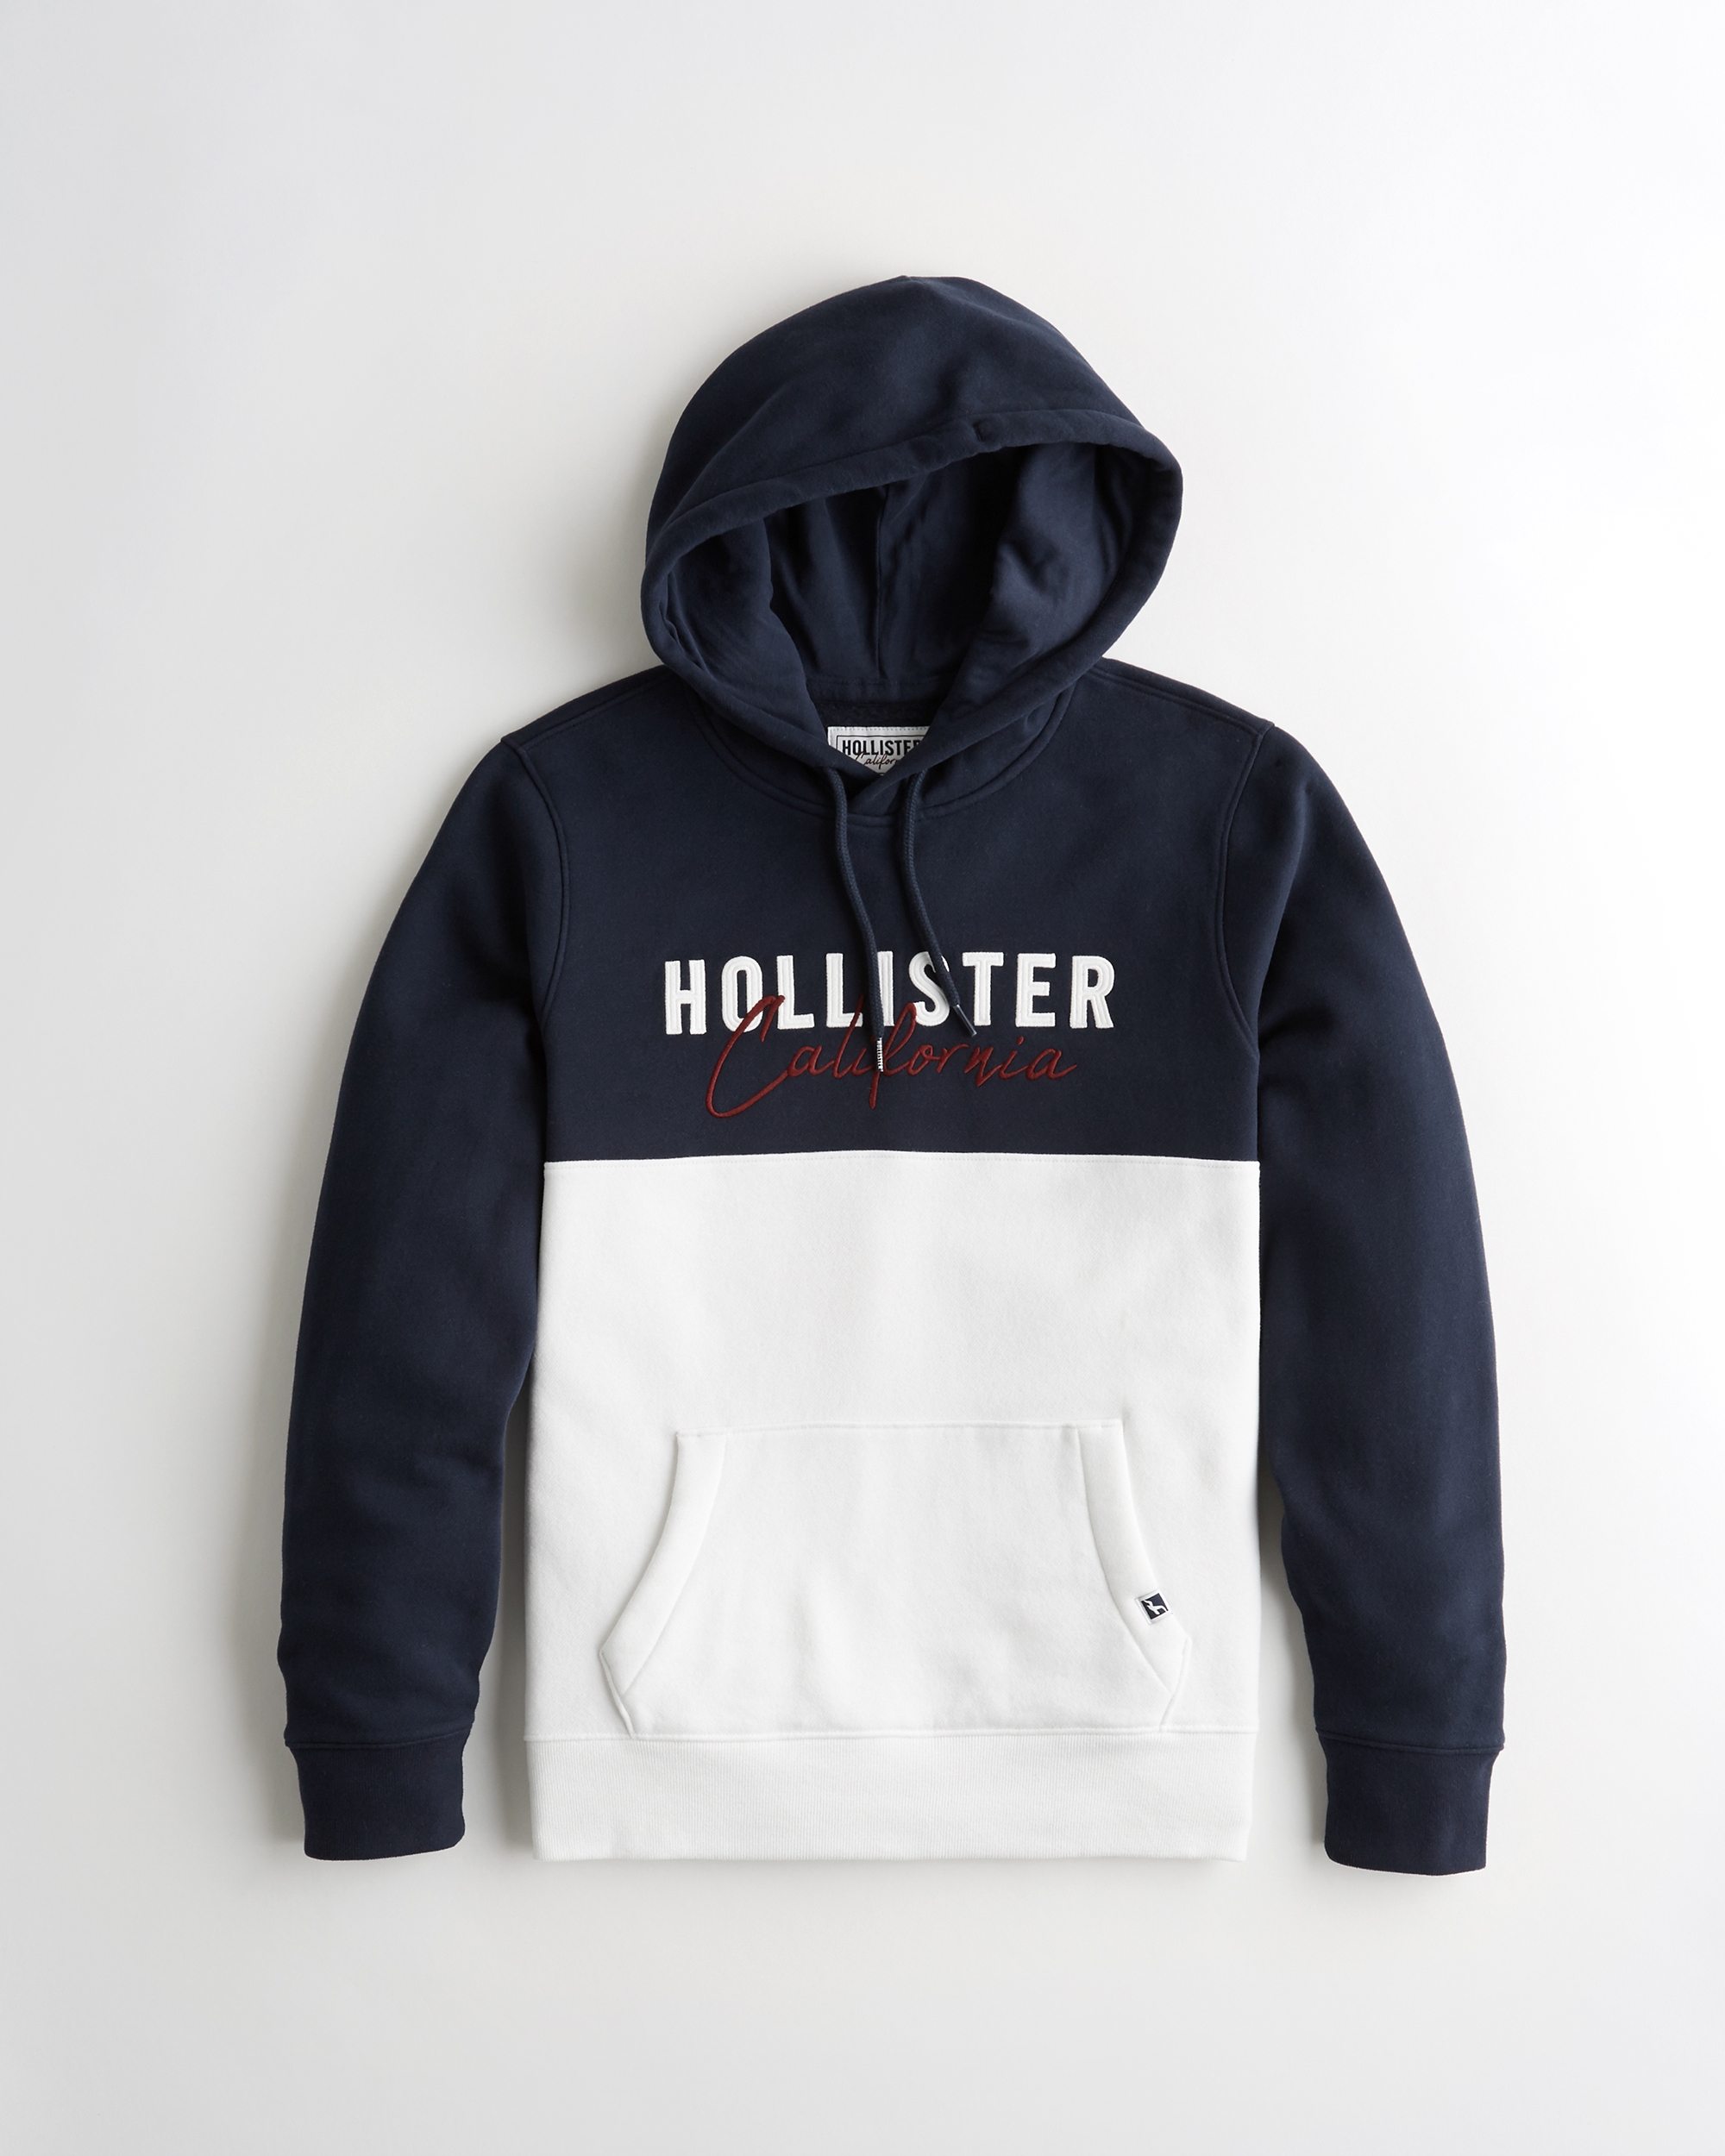 hollister hoodies clearance Cheaper 